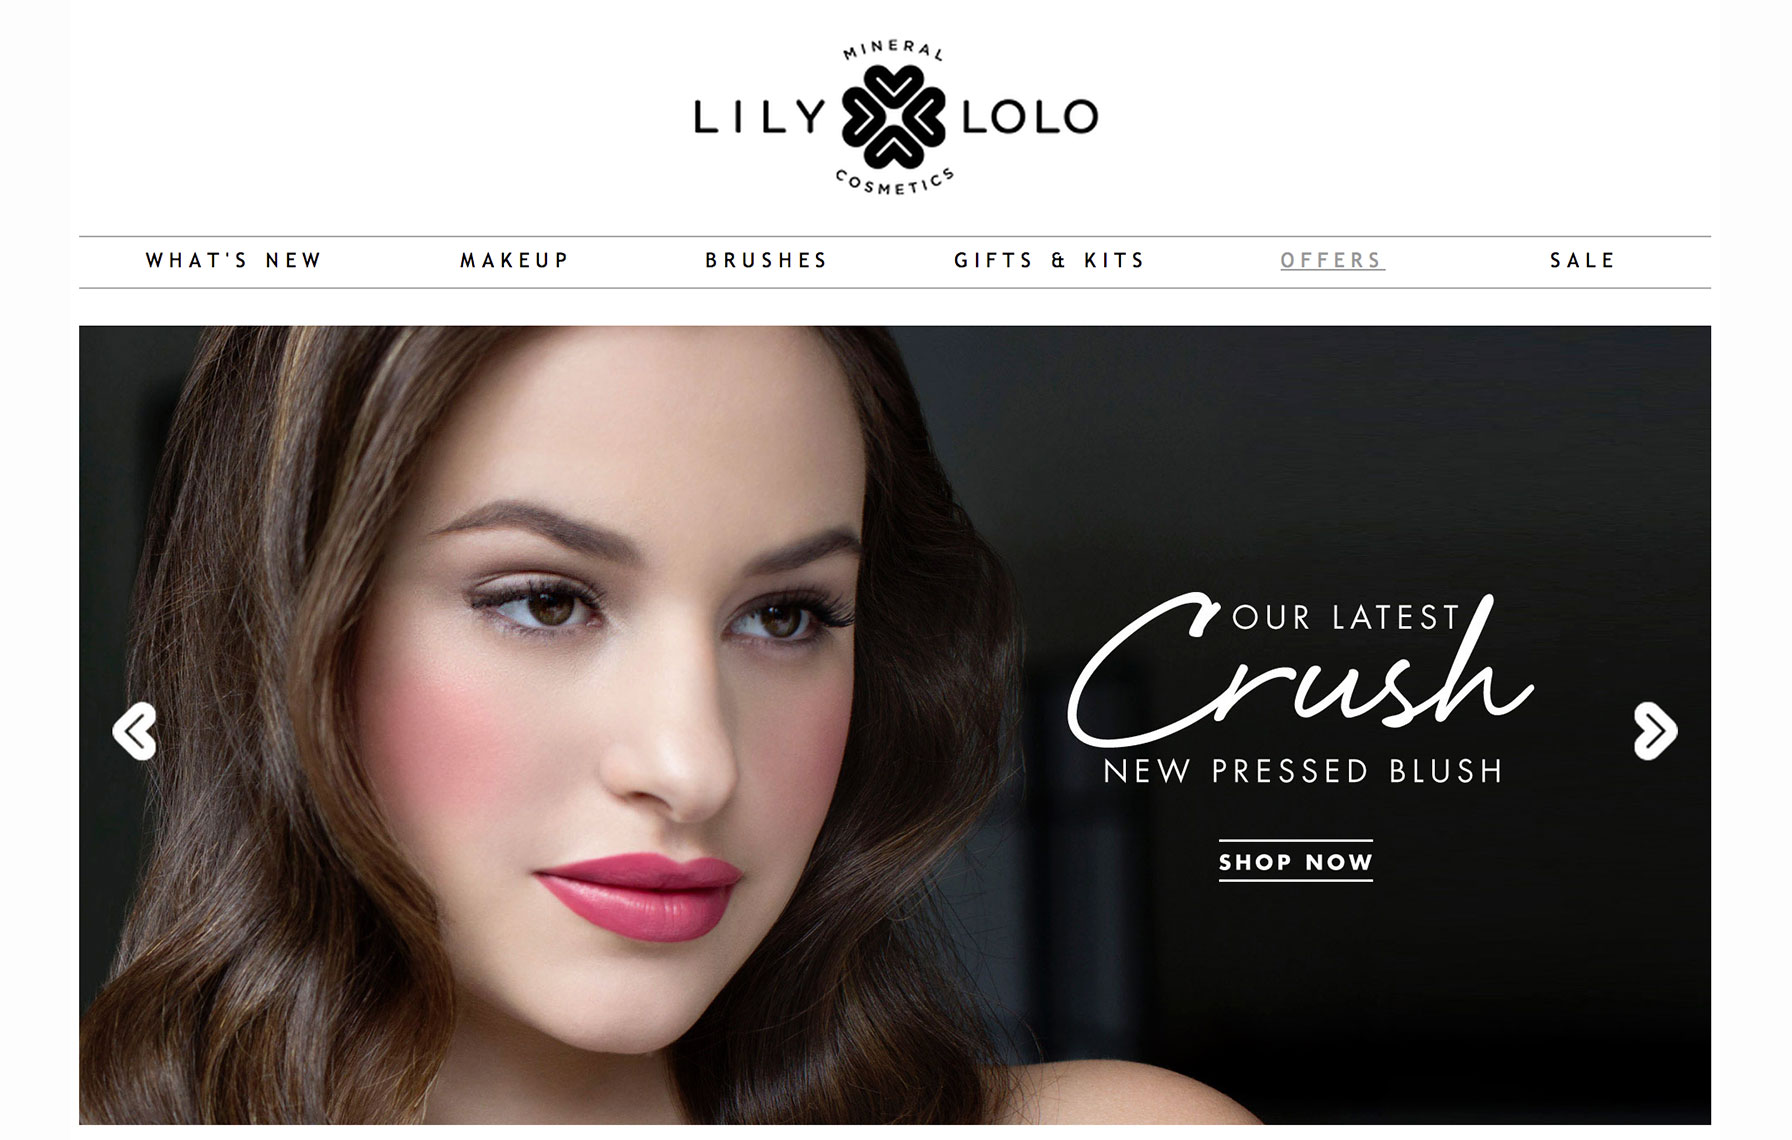 020-140703-LilyLolo-screen-grab